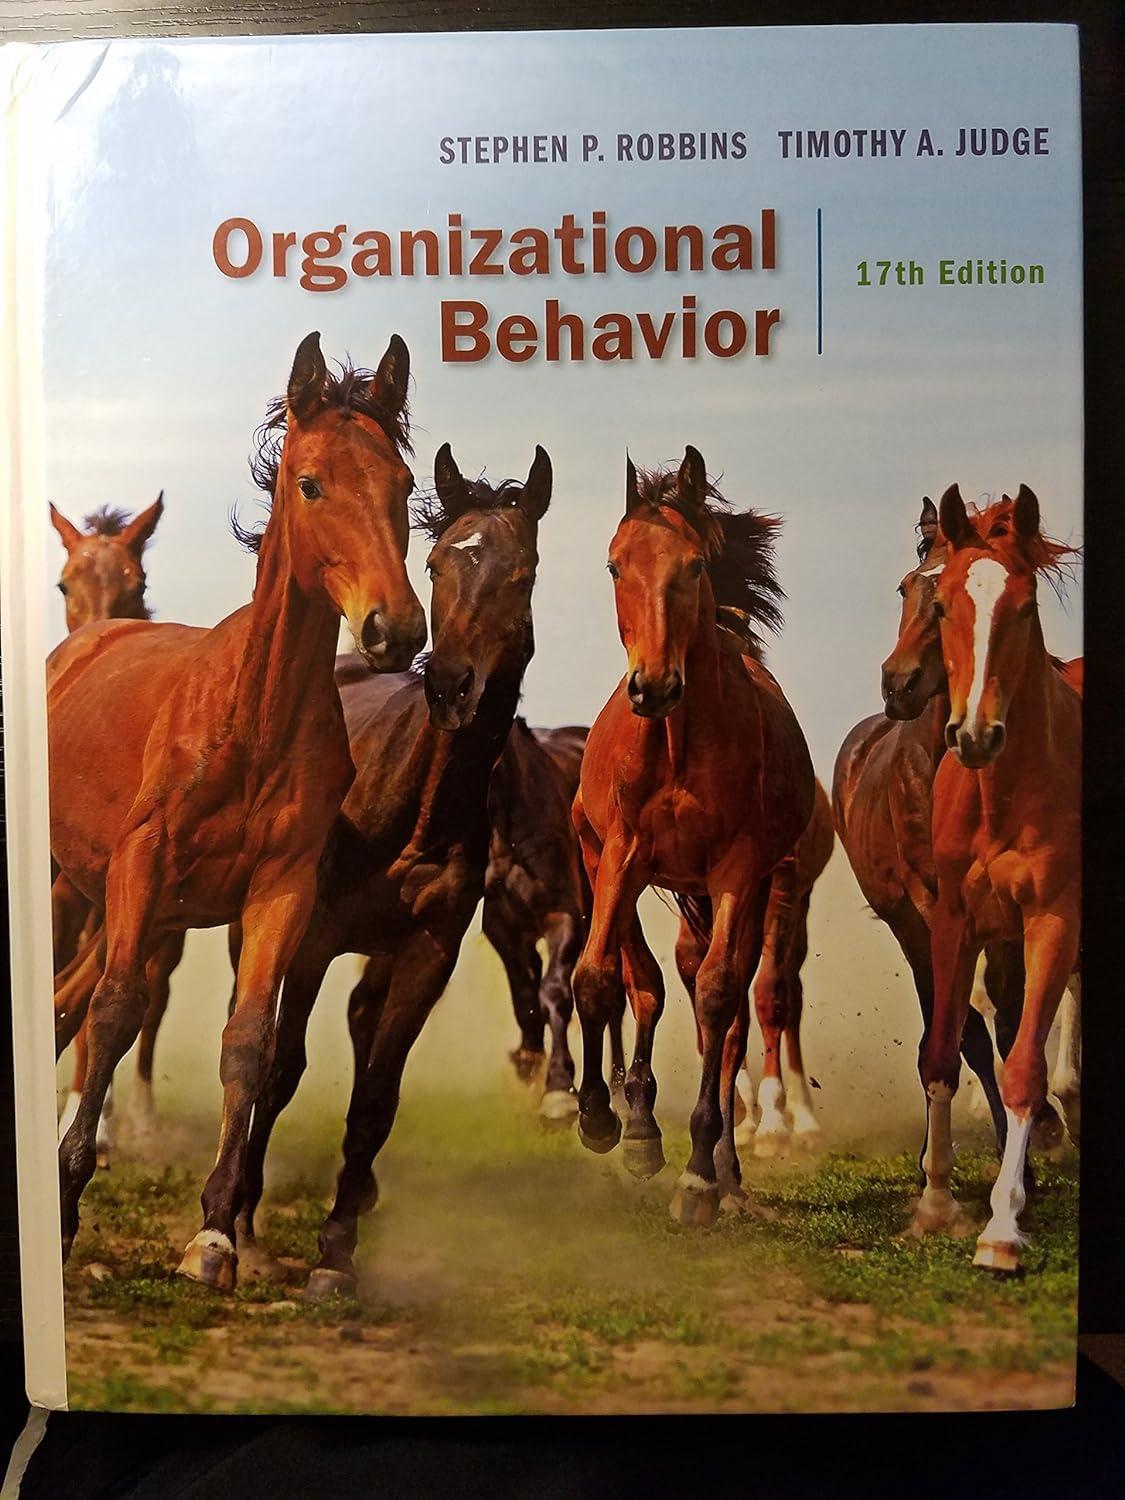 organizational behavior standalone book 17th edition stephen robbins, timothy judge 013410398x, 978-0134103983